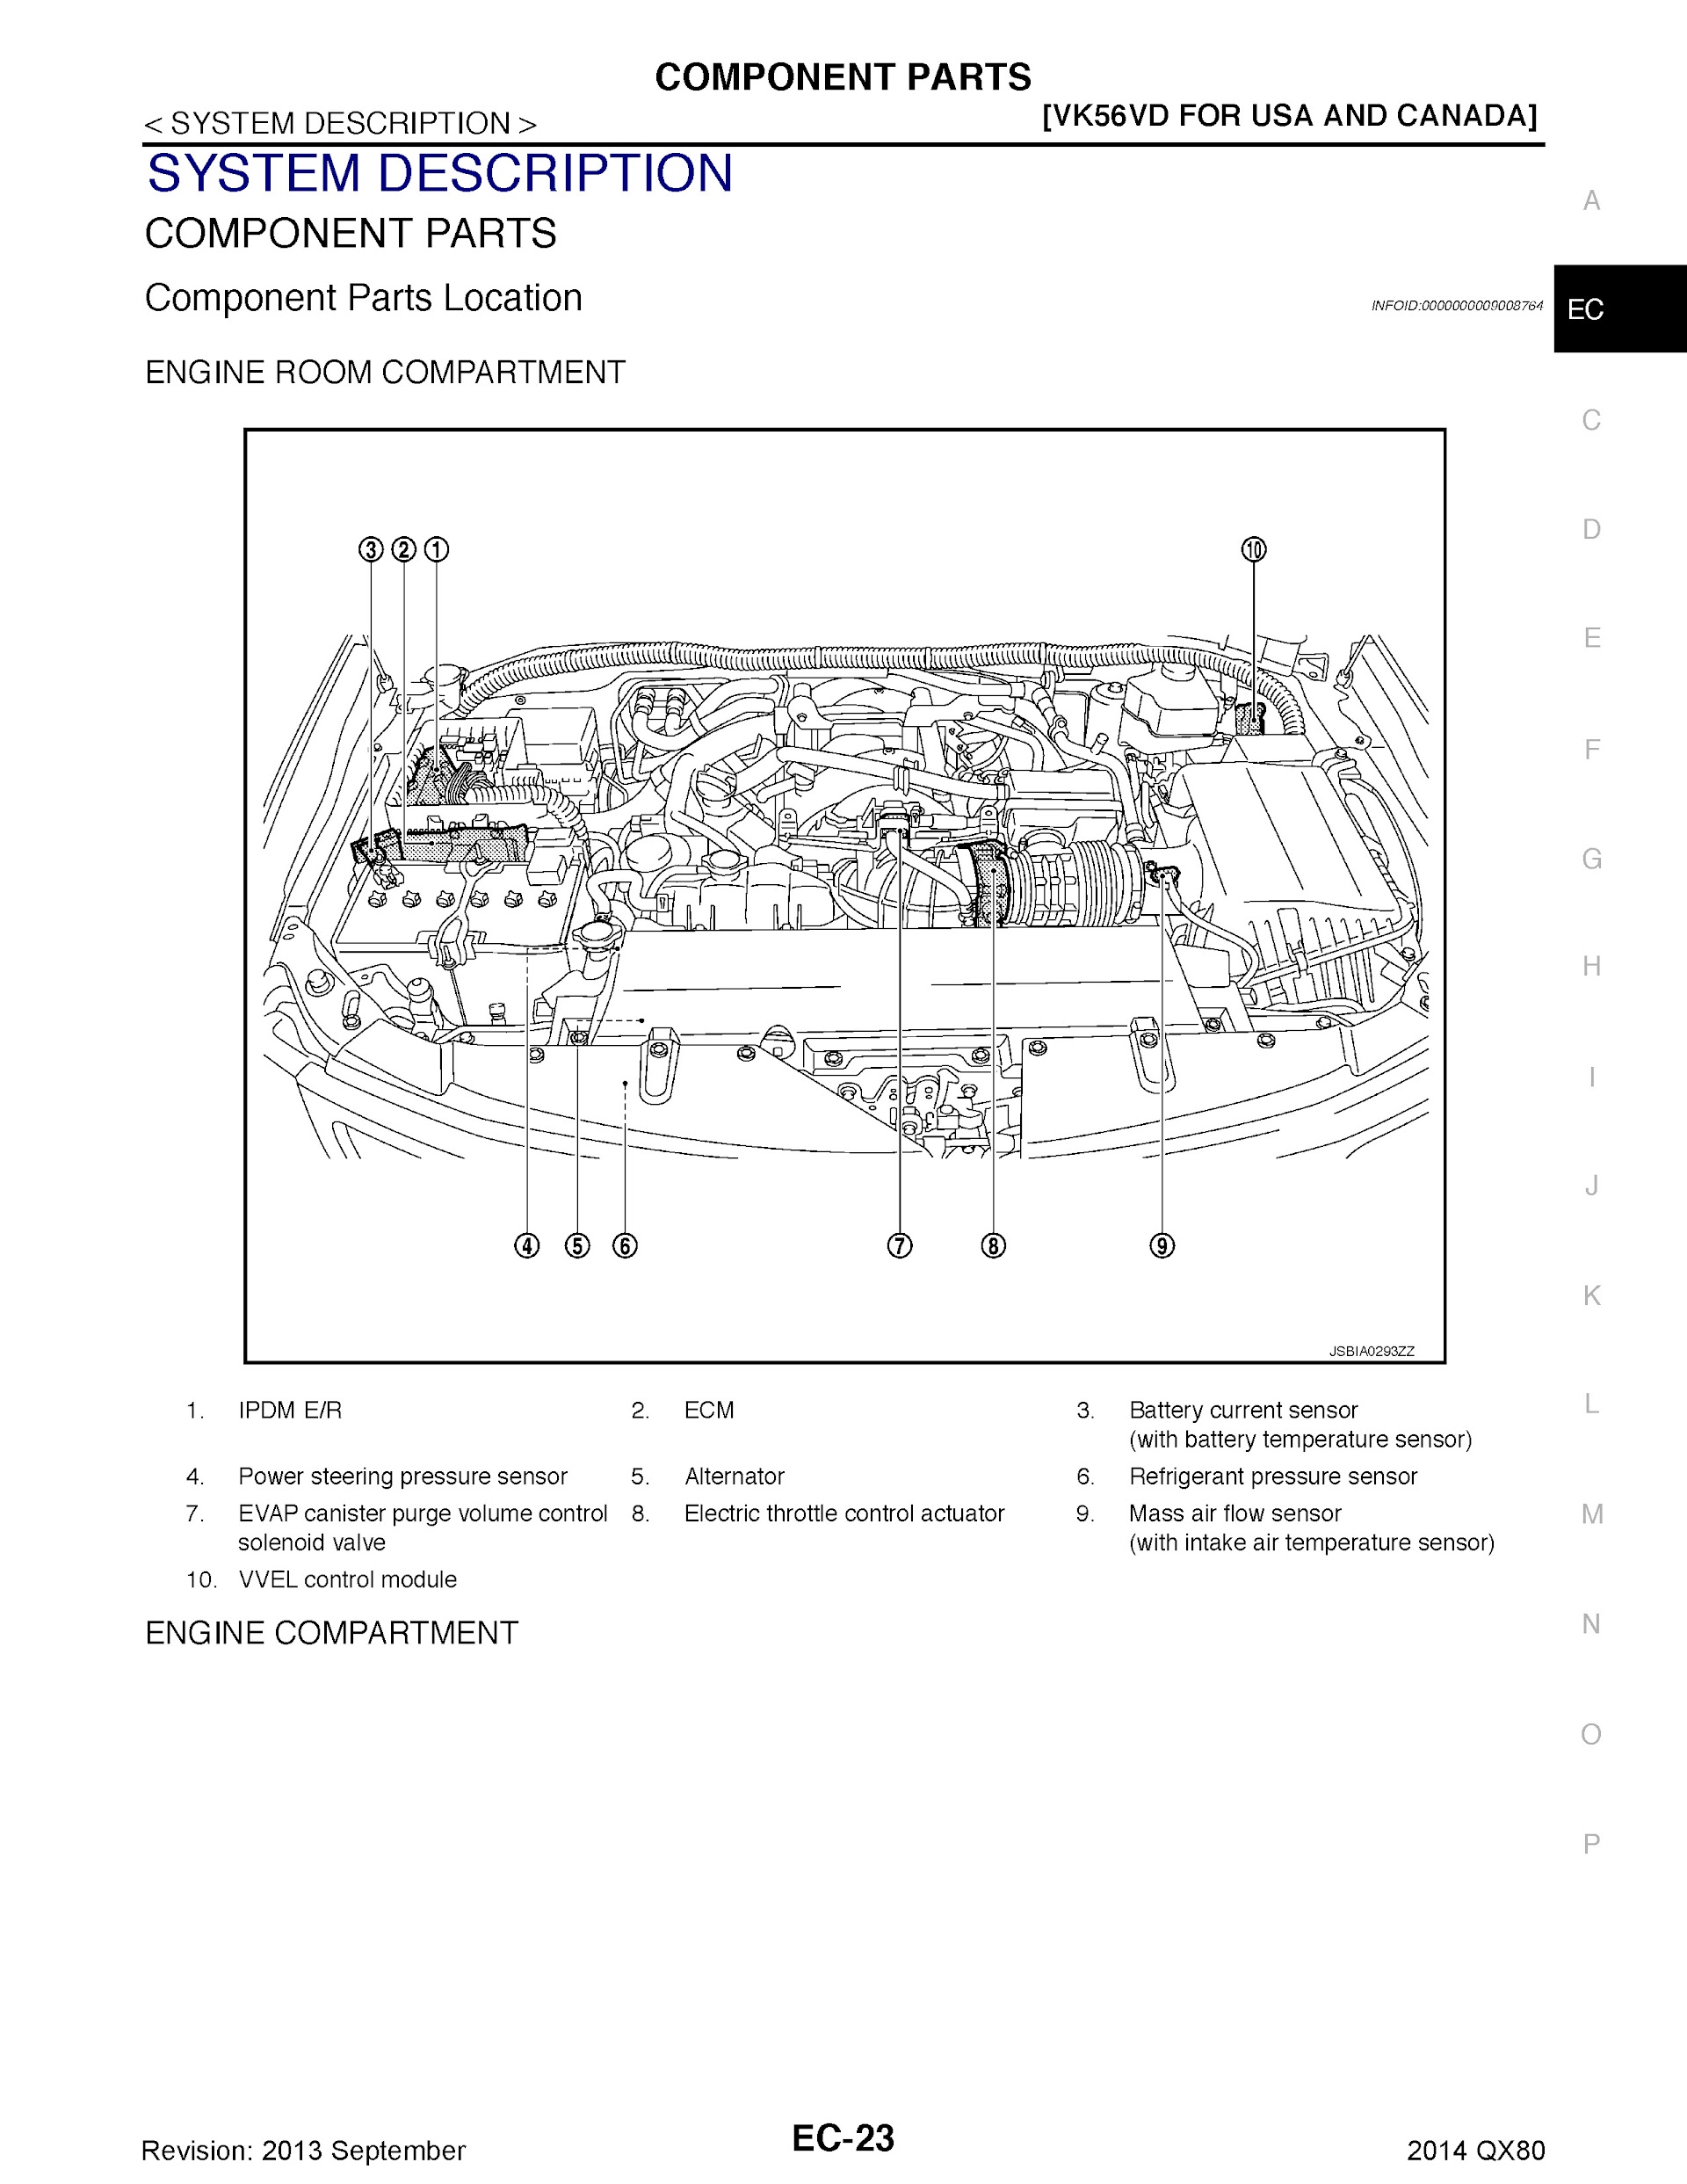 2014 Infiniti QX80 Repair Manual, VK56VD Components Parts for USA and Canada